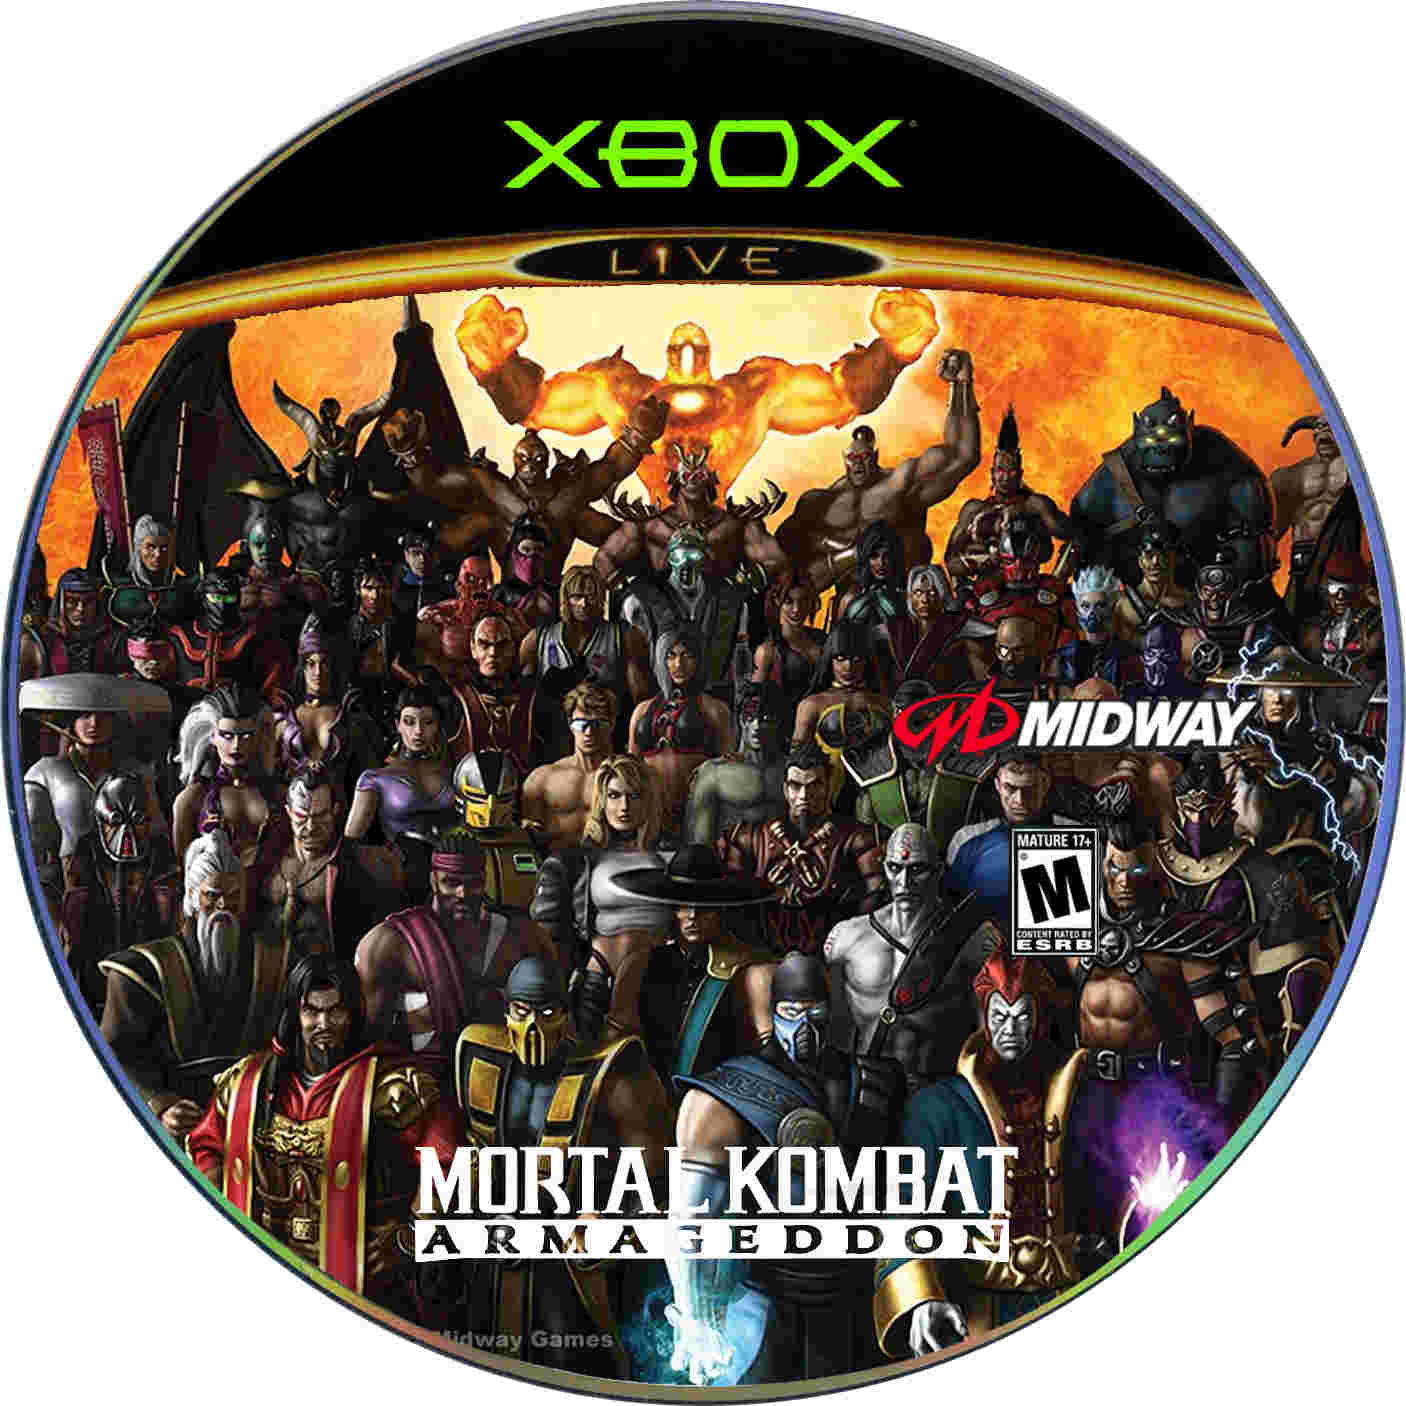 Мортал комбат музыка. Mortal Kombat трек. Мортал комбат мелодия. Mortal Kombat Armageddon на Xbox 360 прошитый. Песня мортал комбат песня.